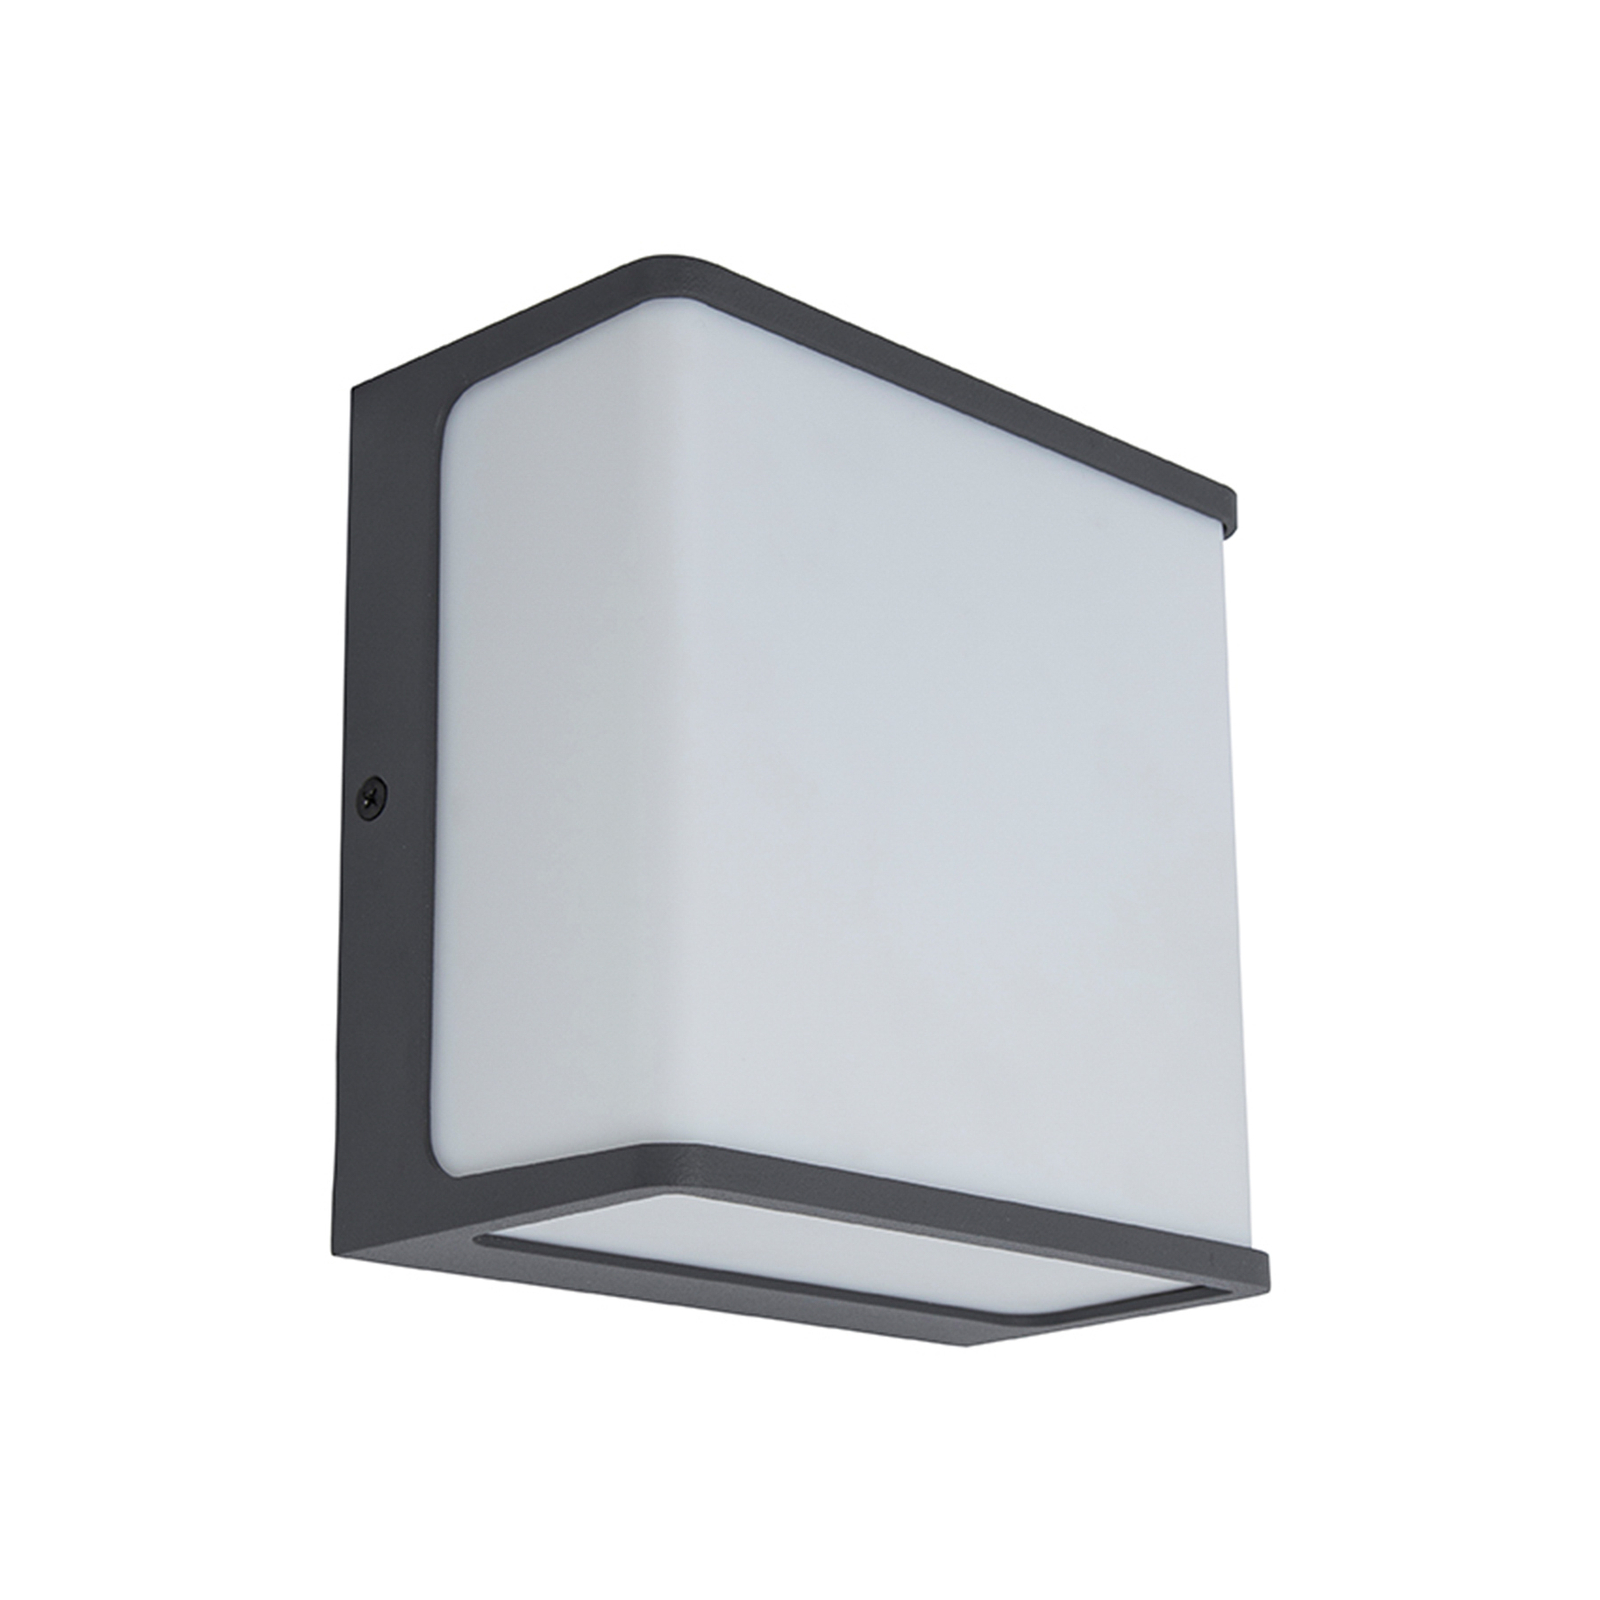 Doblo LED outdoor wall light rectangle 15cm 4,000K